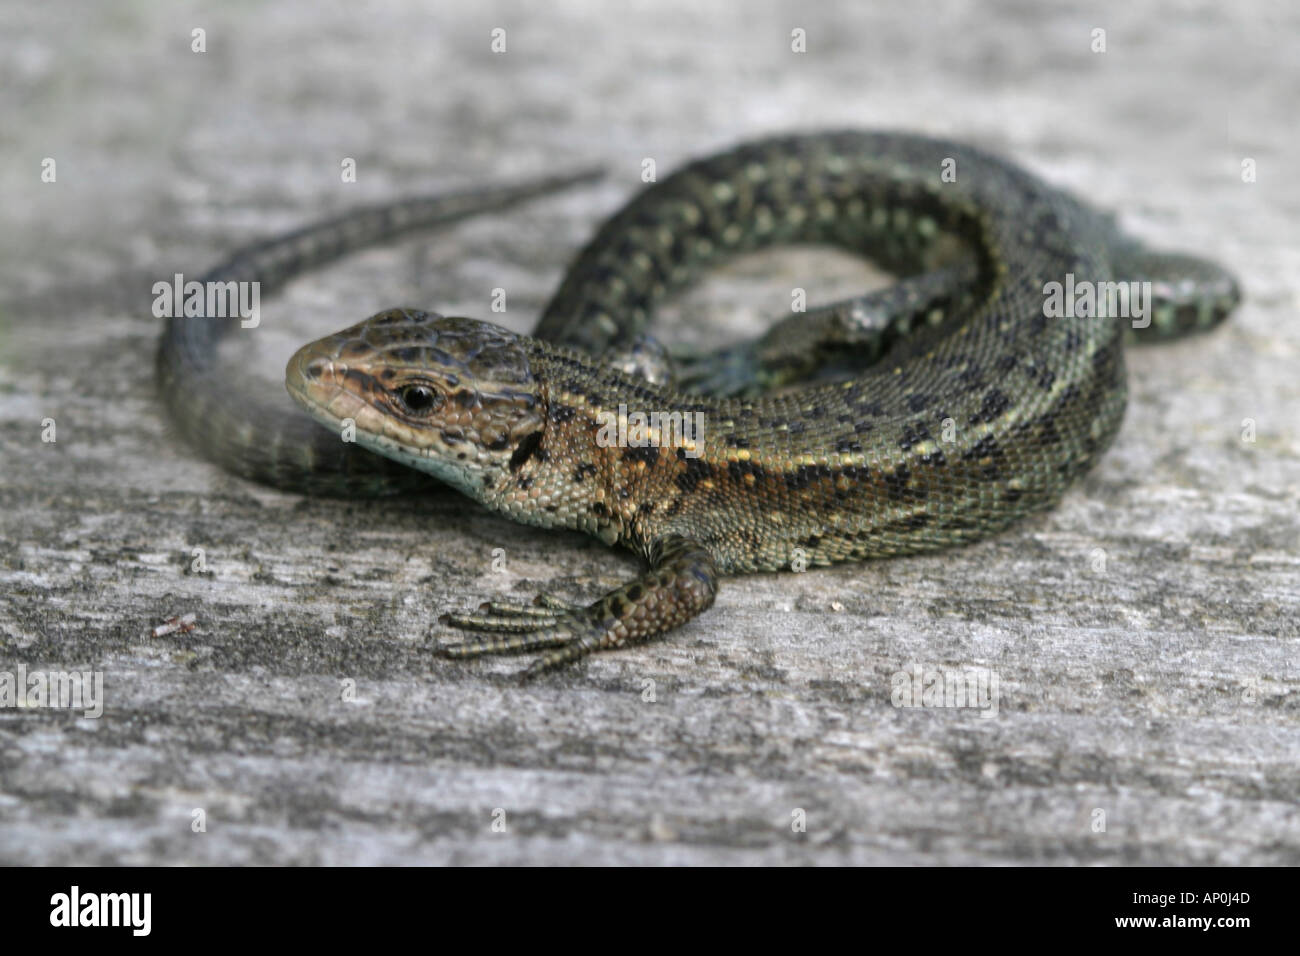 Common lizard Lacerta agilis on boardwalk Stock Photo